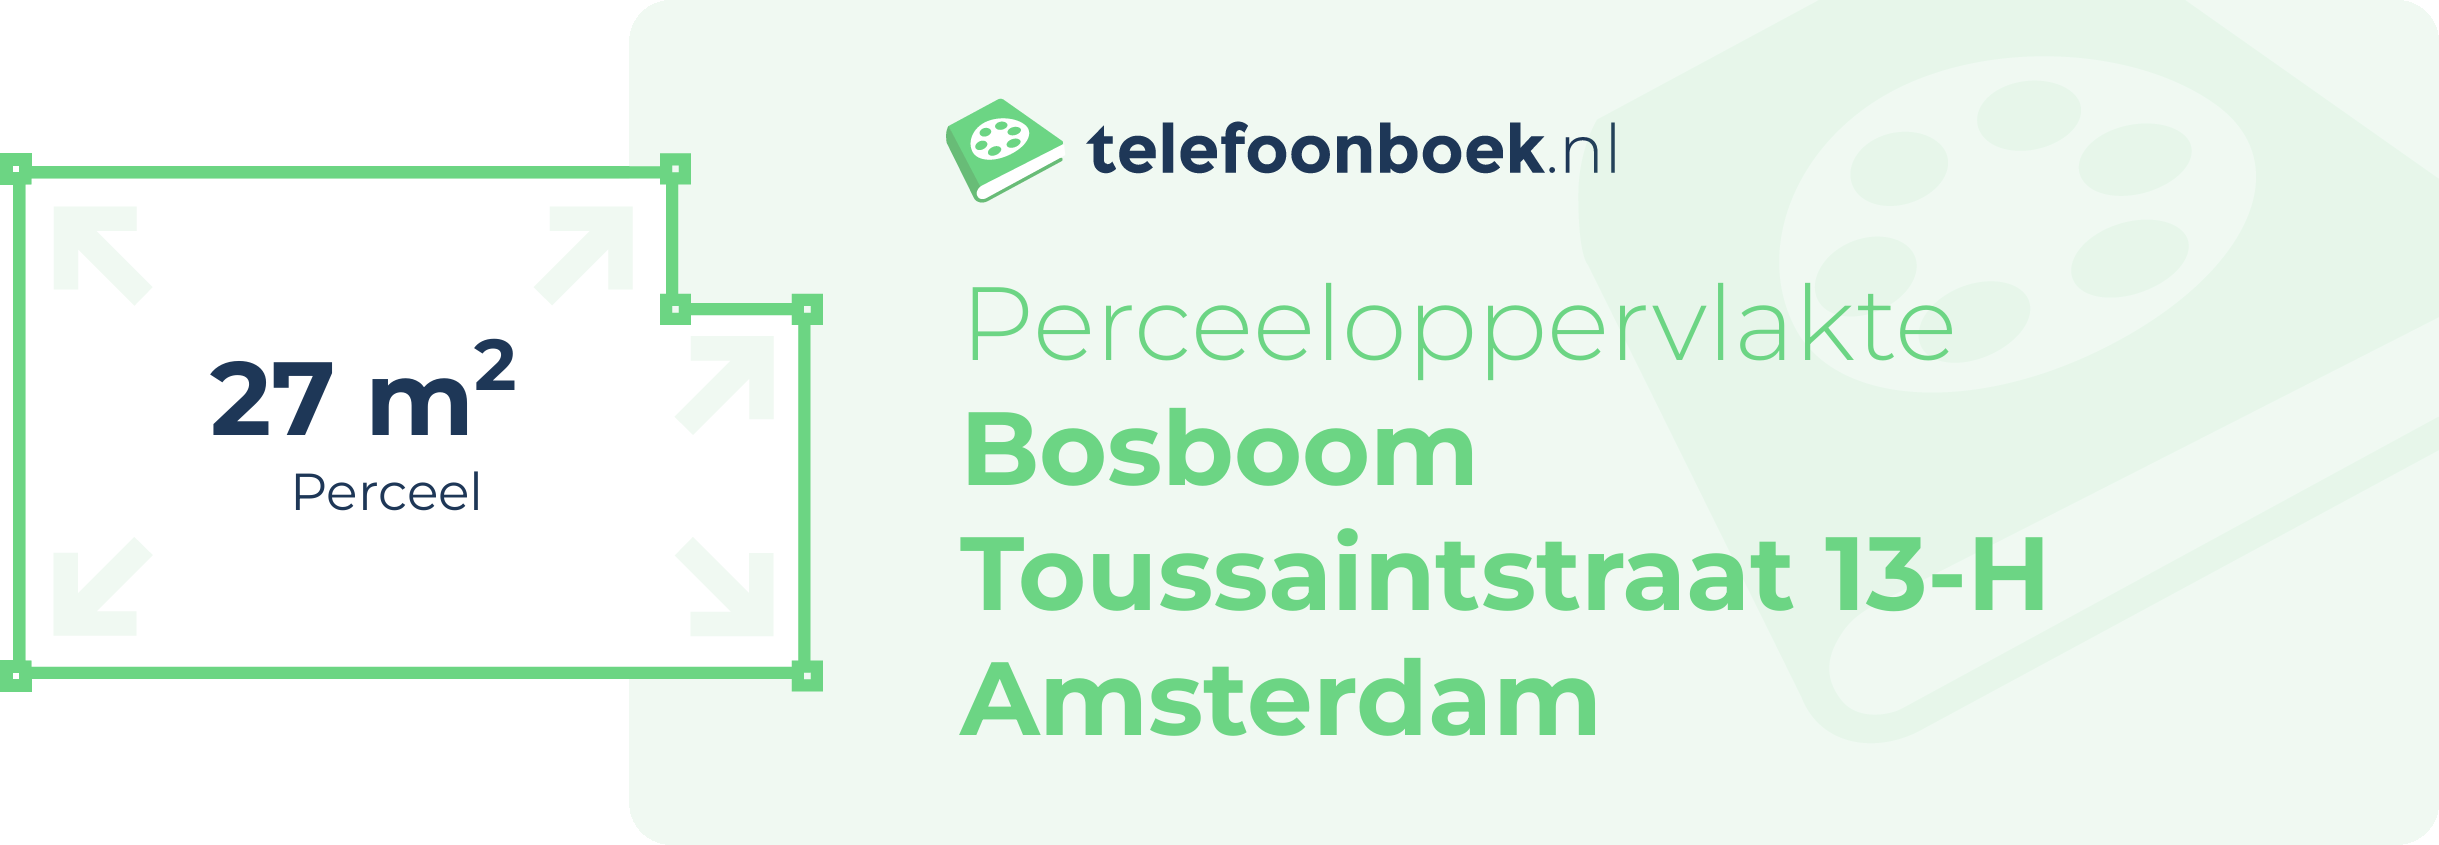 Perceeloppervlakte Bosboom Toussaintstraat 13-H Amsterdam